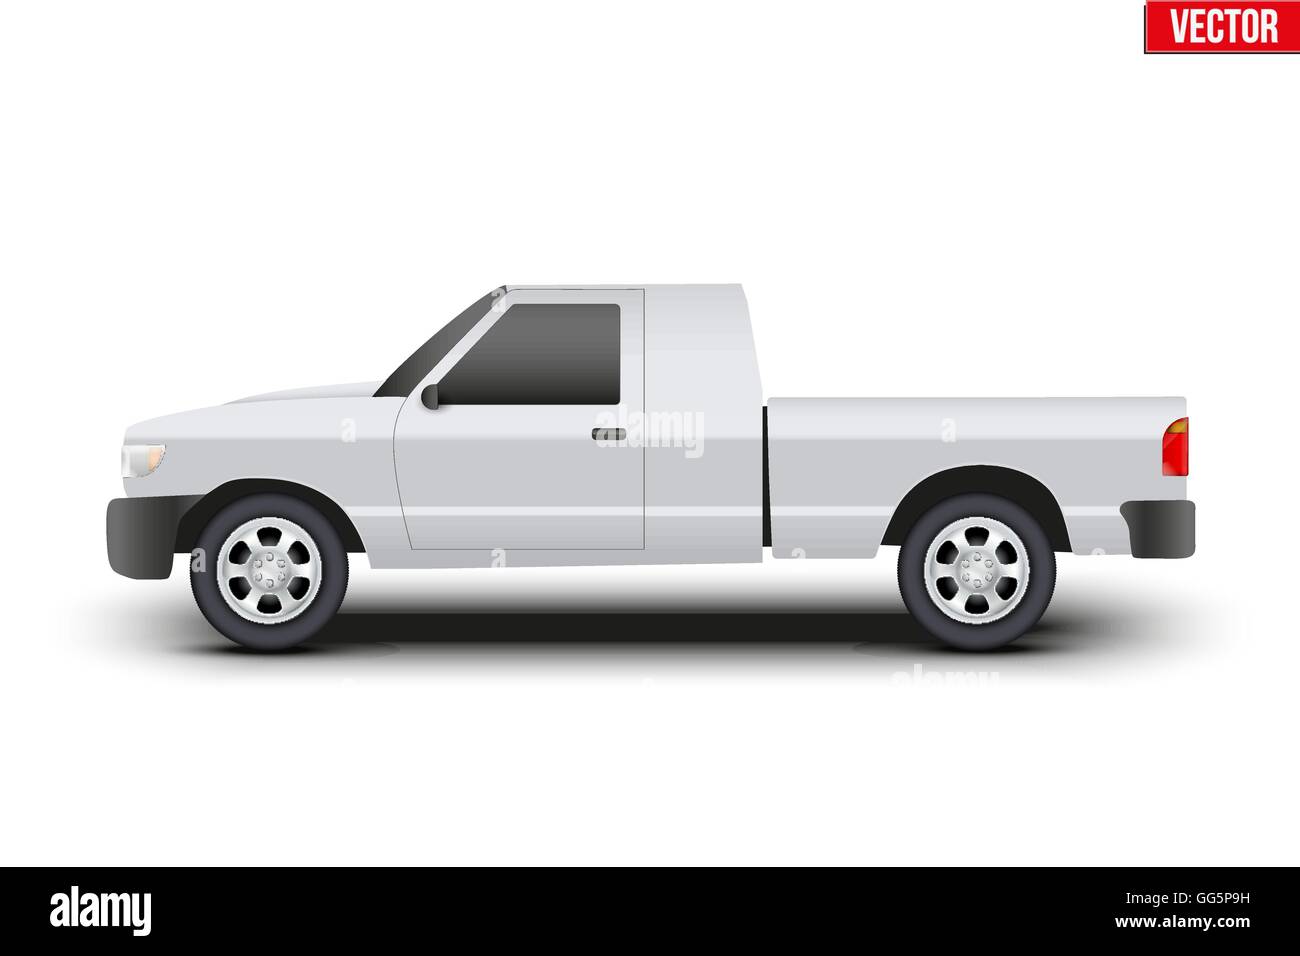 Original classic Pickup truck vector illustration Stock Vector